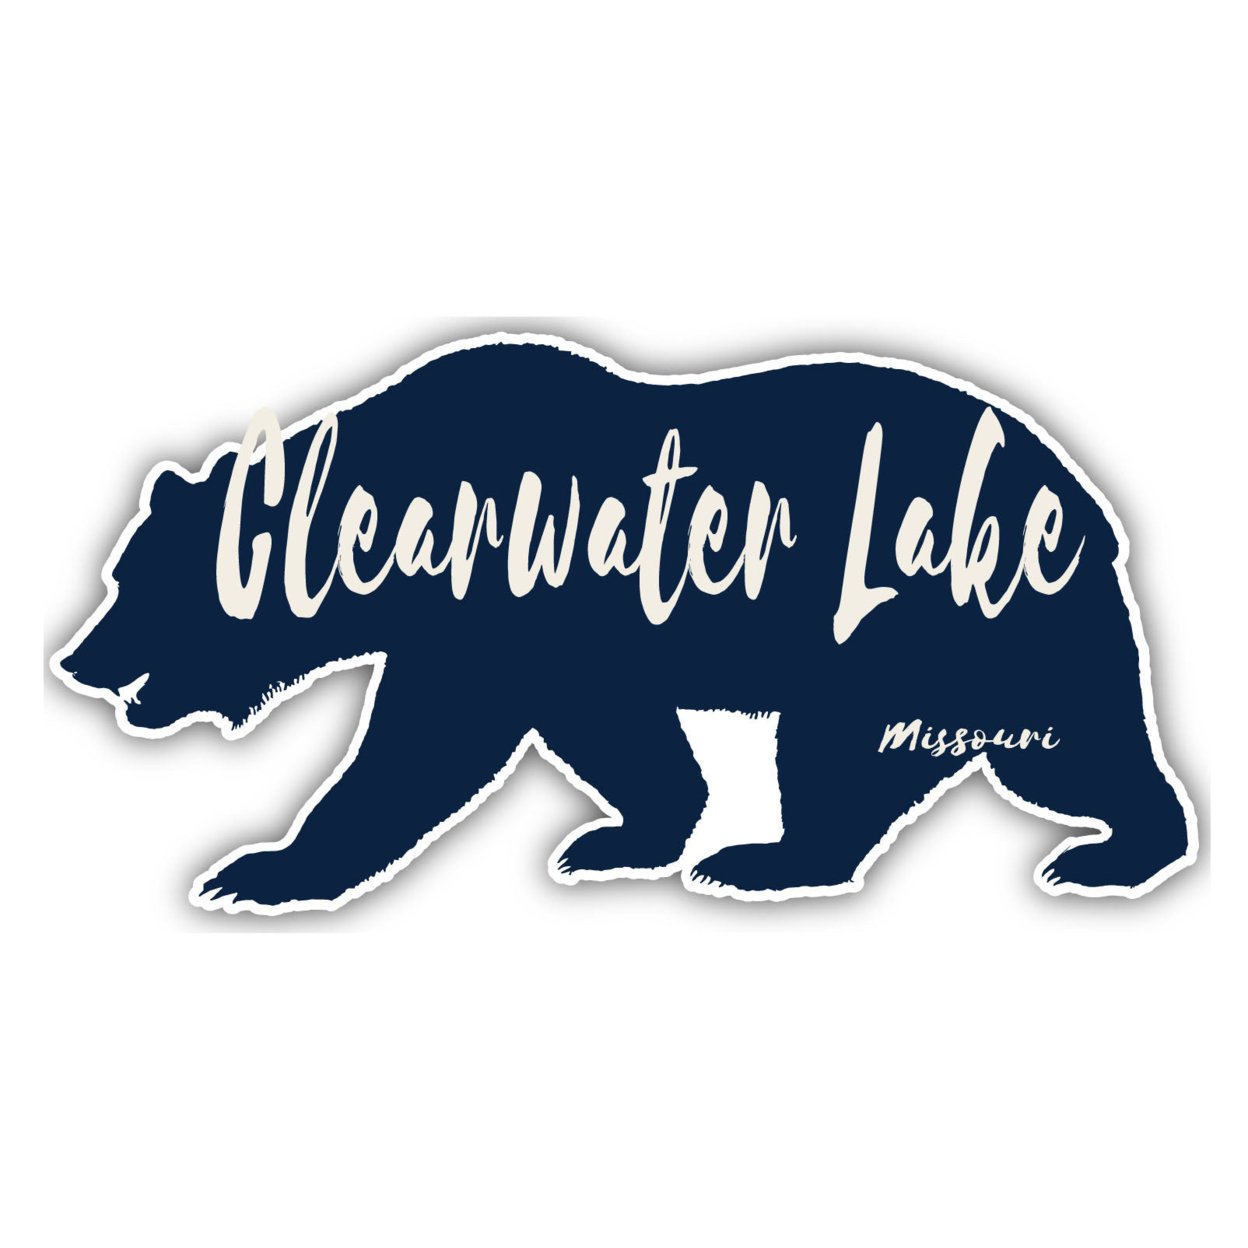 Clearwater Lake Missouri Souvenir Decorative Stickers (Choose Theme And Size) - Single Unit, 4-Inch, Bear